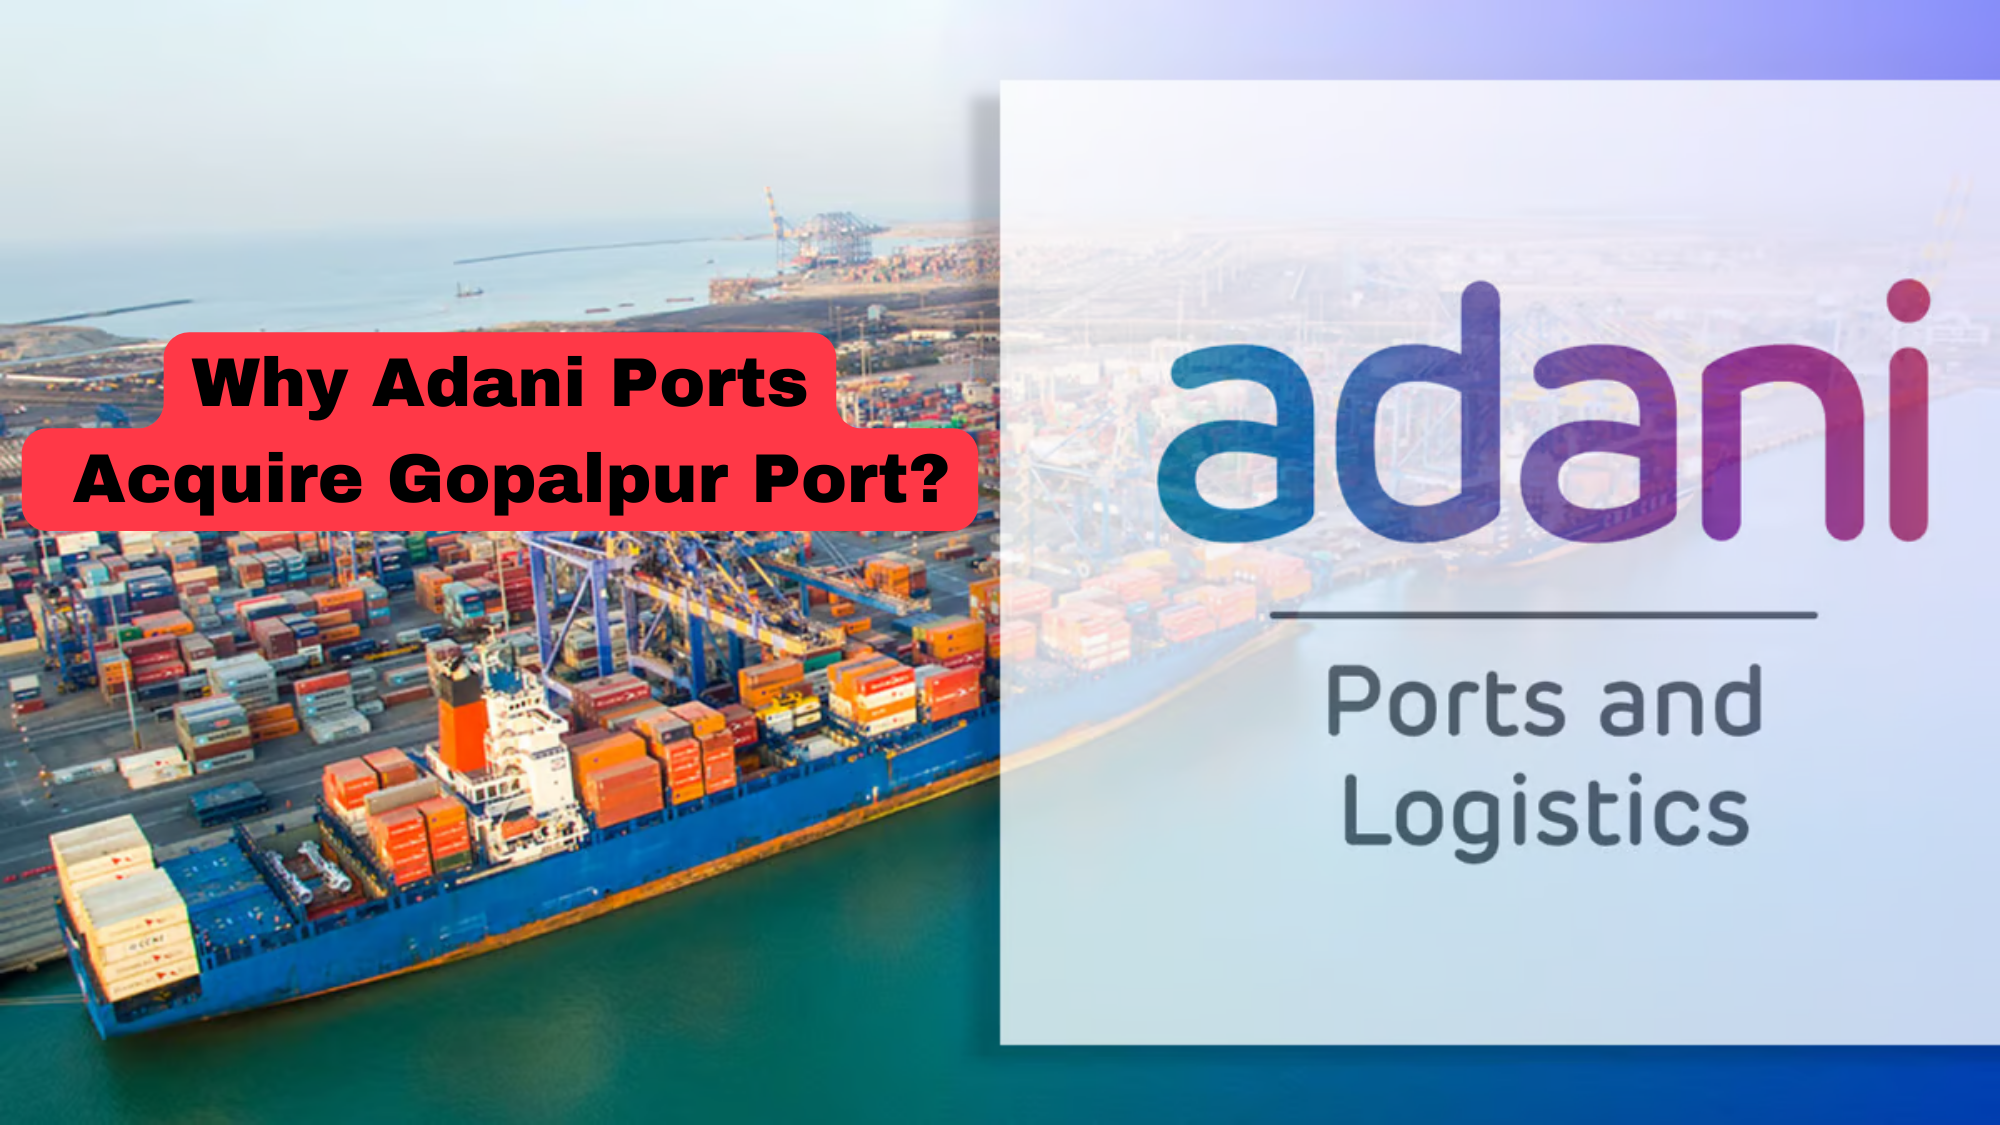 Why Adani Ports Acquire Majority Stake in Gopalpur Port?